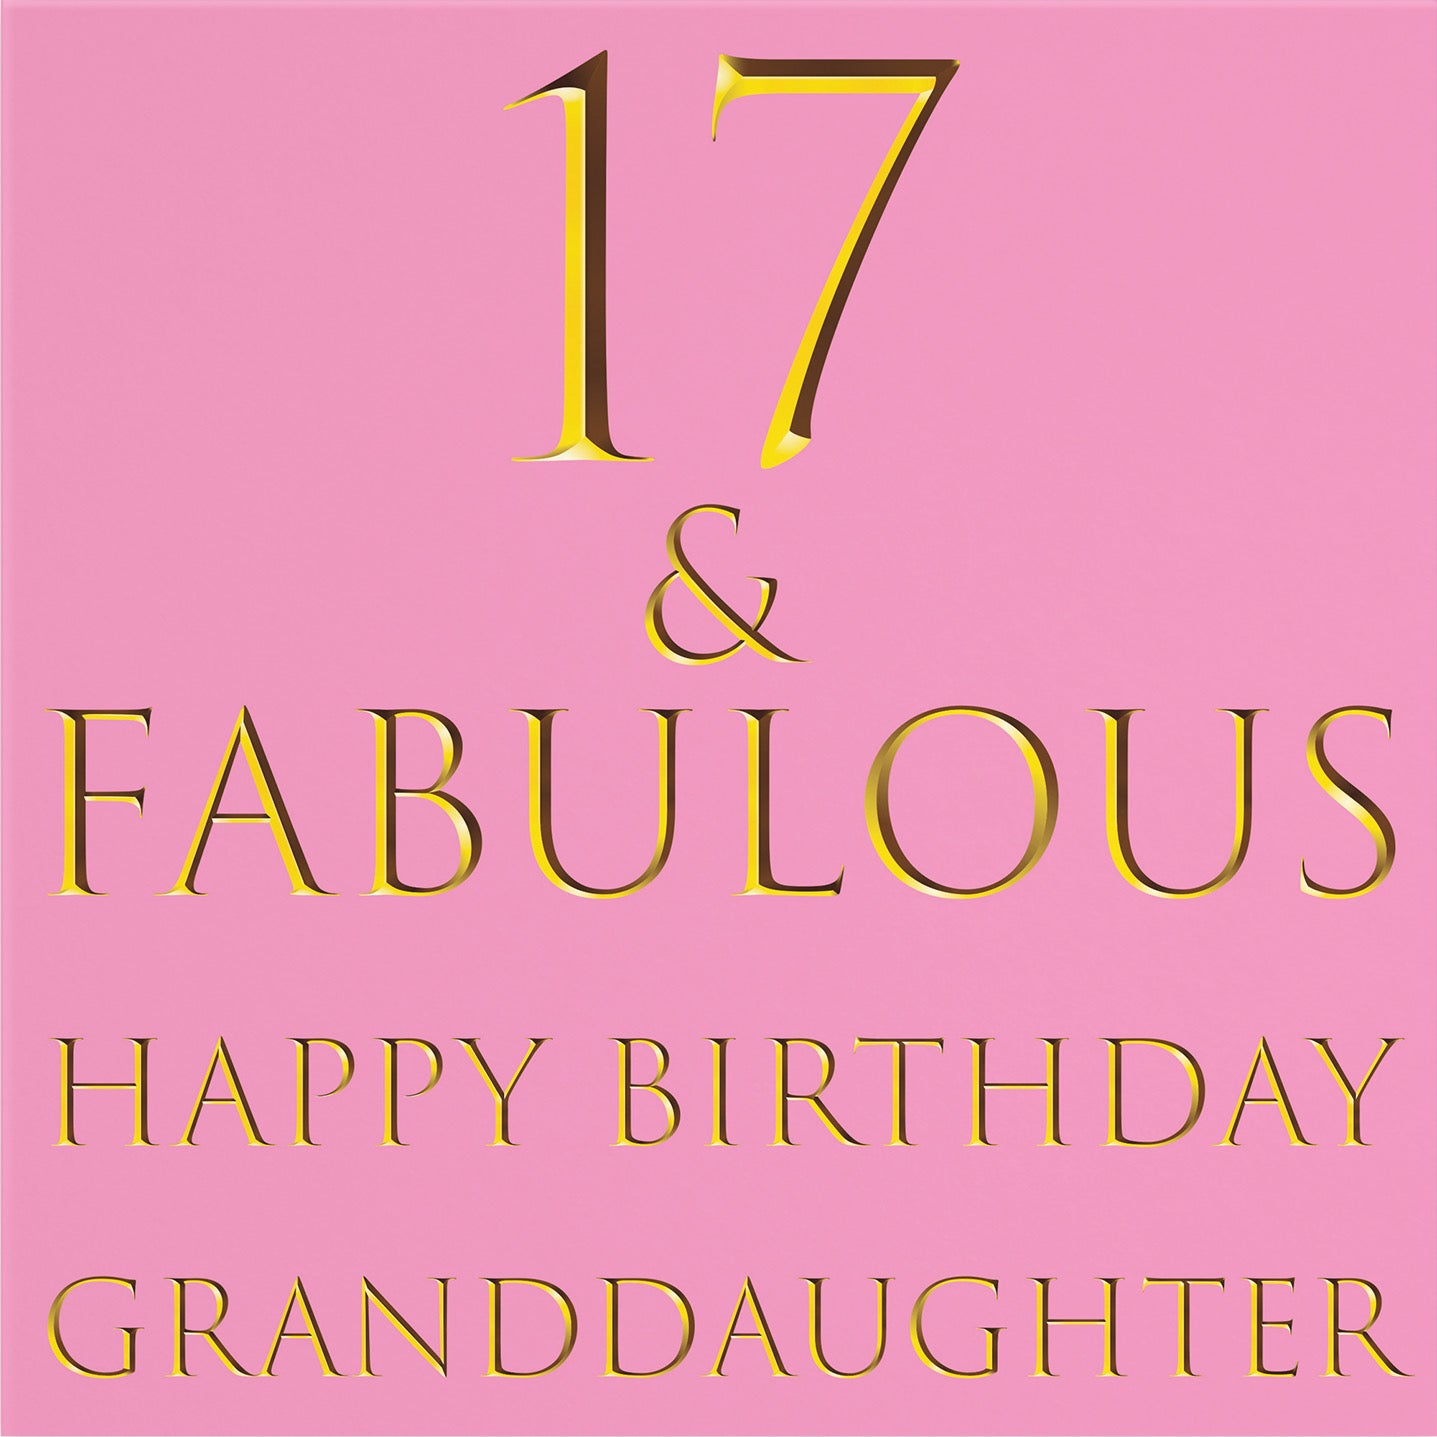 Large Granddaughter 17th Birthday Card Still Totally Fabulous - Default Title (B0BBMTQ1DG)